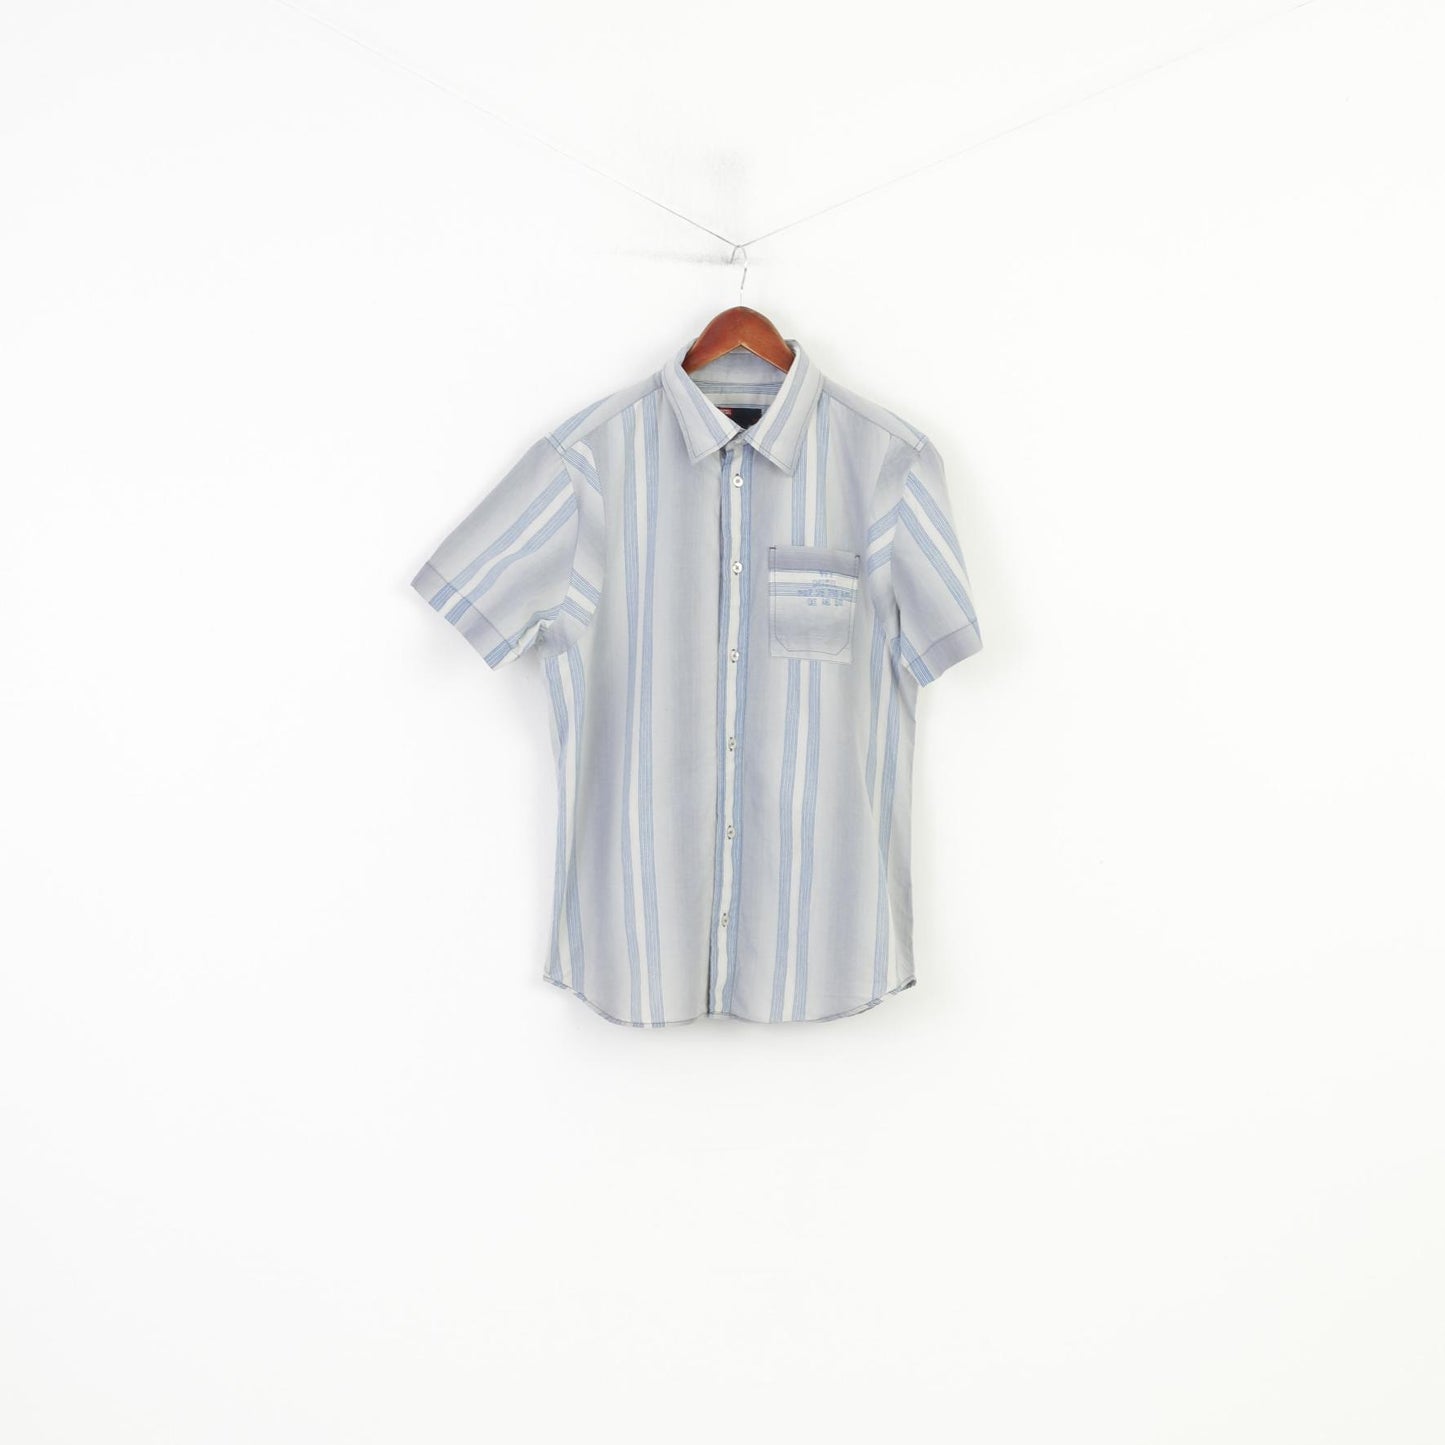 Diesel Men M Casual Shirt Blue Striped Short Sleeve Cotton Vintage Classic Top 